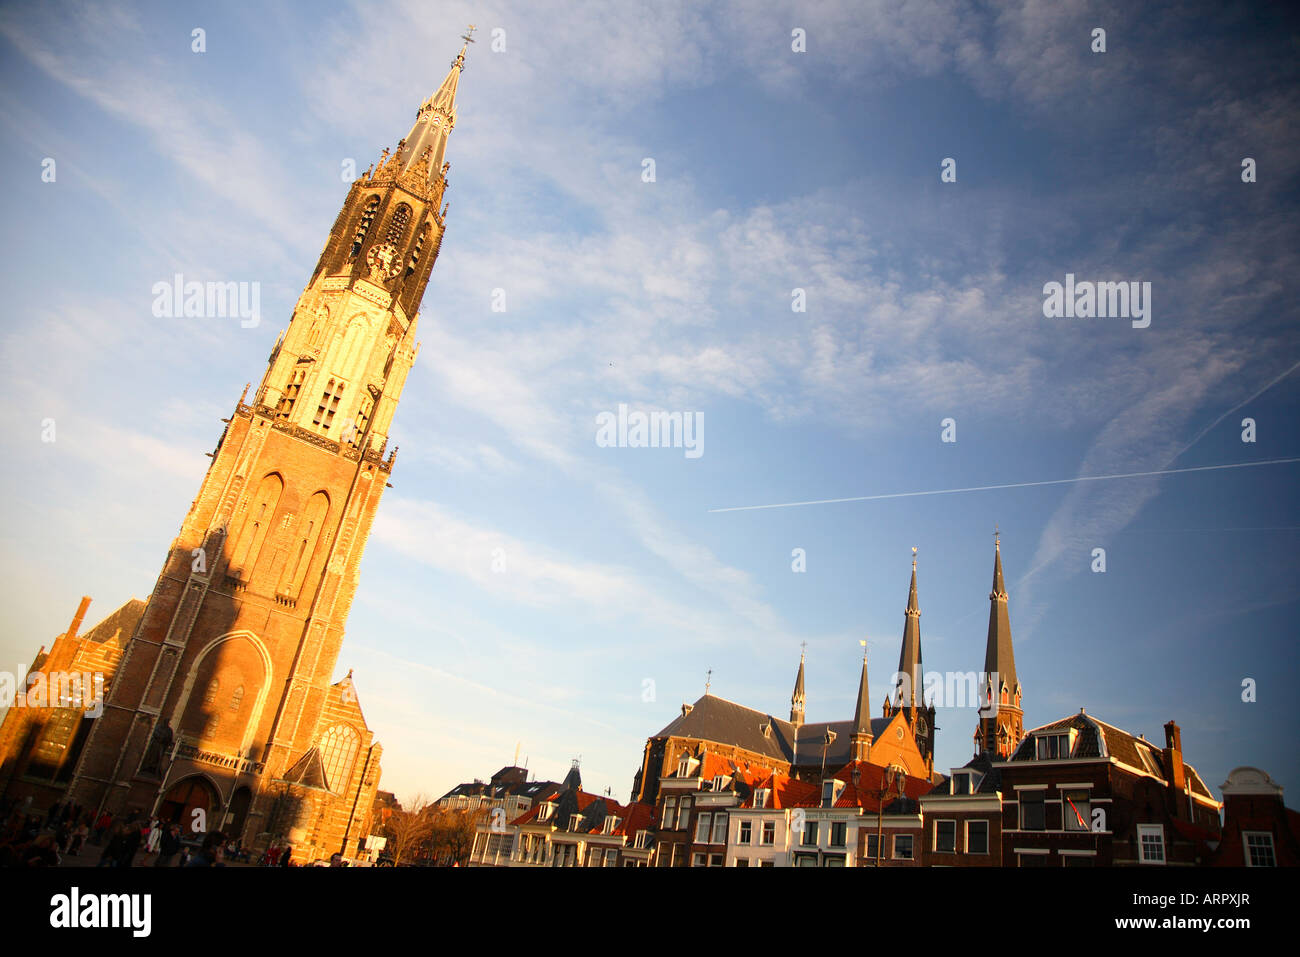 Delft, Grote Markt, Nieuwe kerk, new Church, market square, Delft Stock Photo